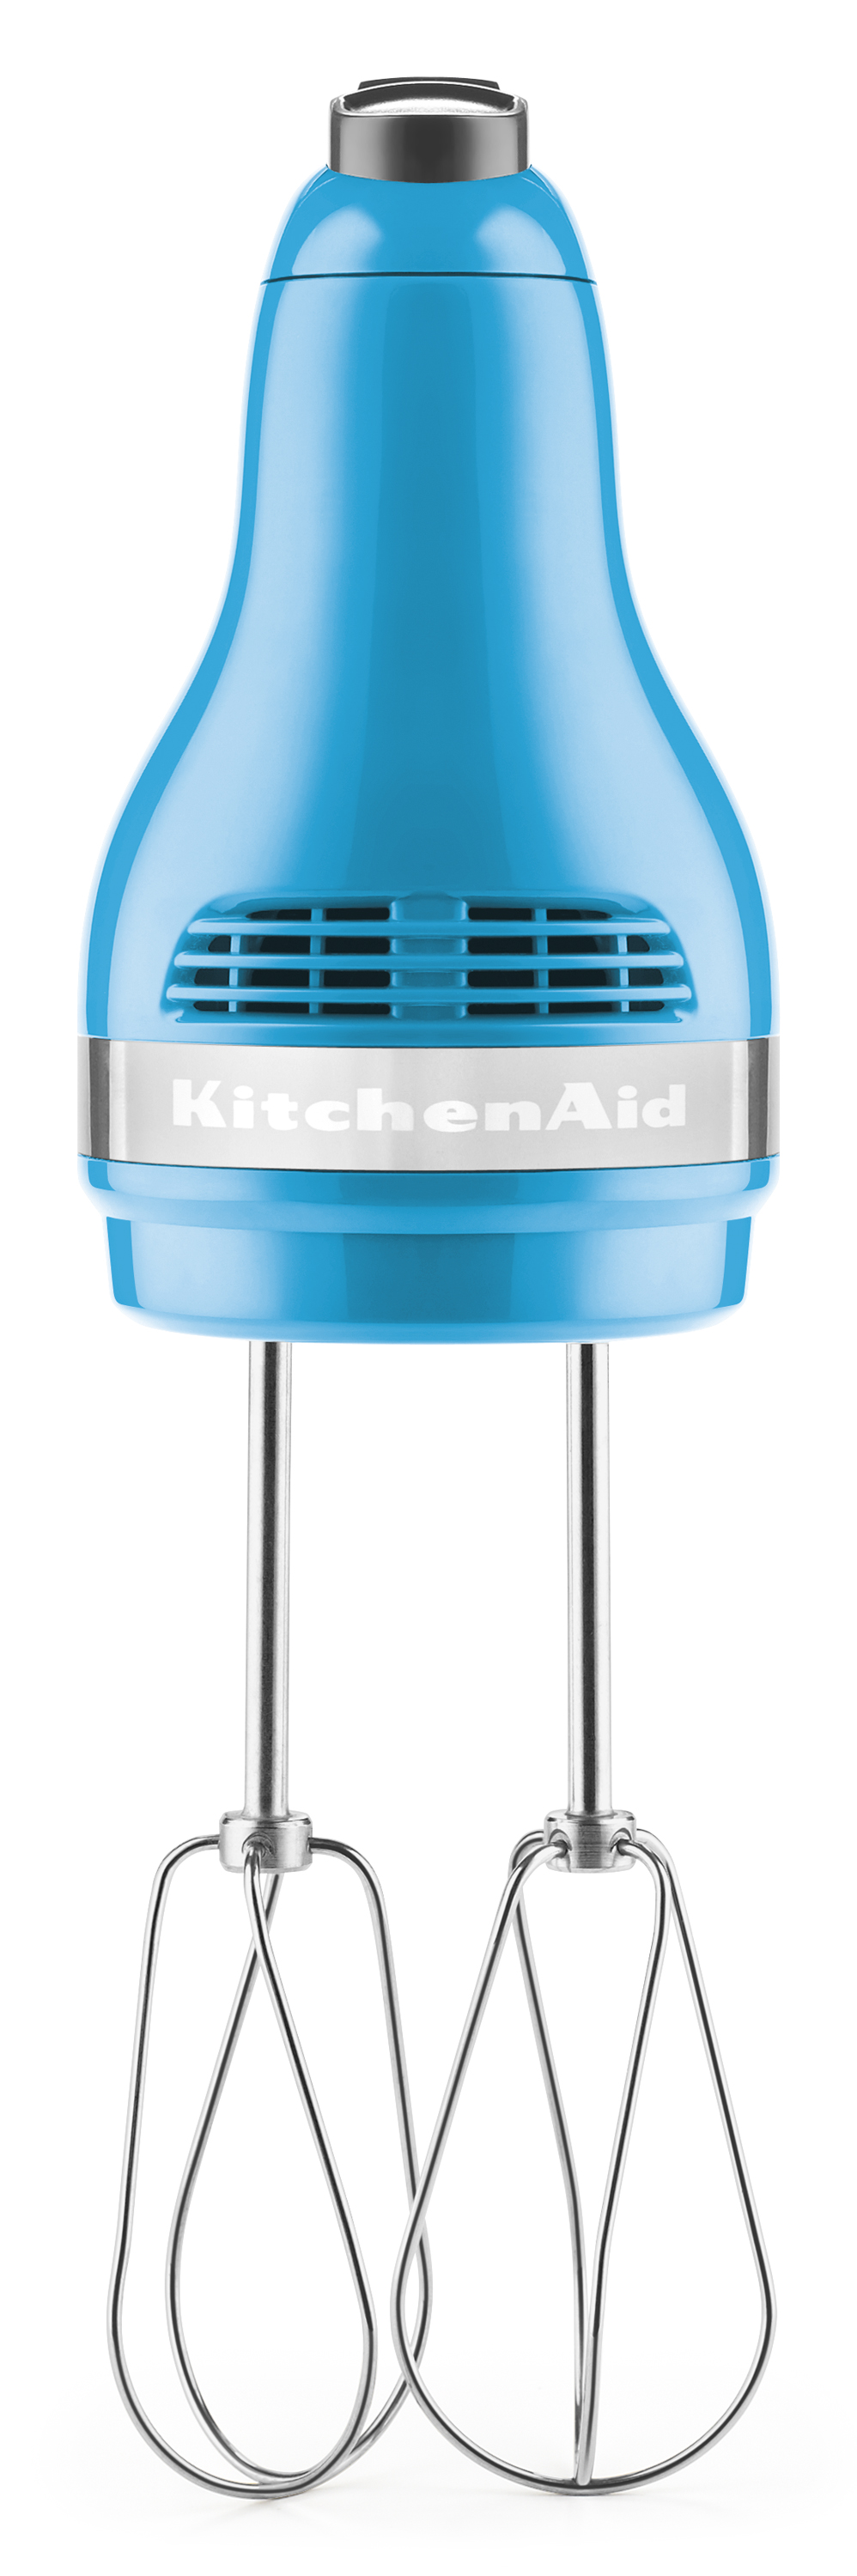 KitchenAid® 5-Speed Ultra Power™ Hand Mixer, Crystal Blue, KHM512 - image 3 of 4